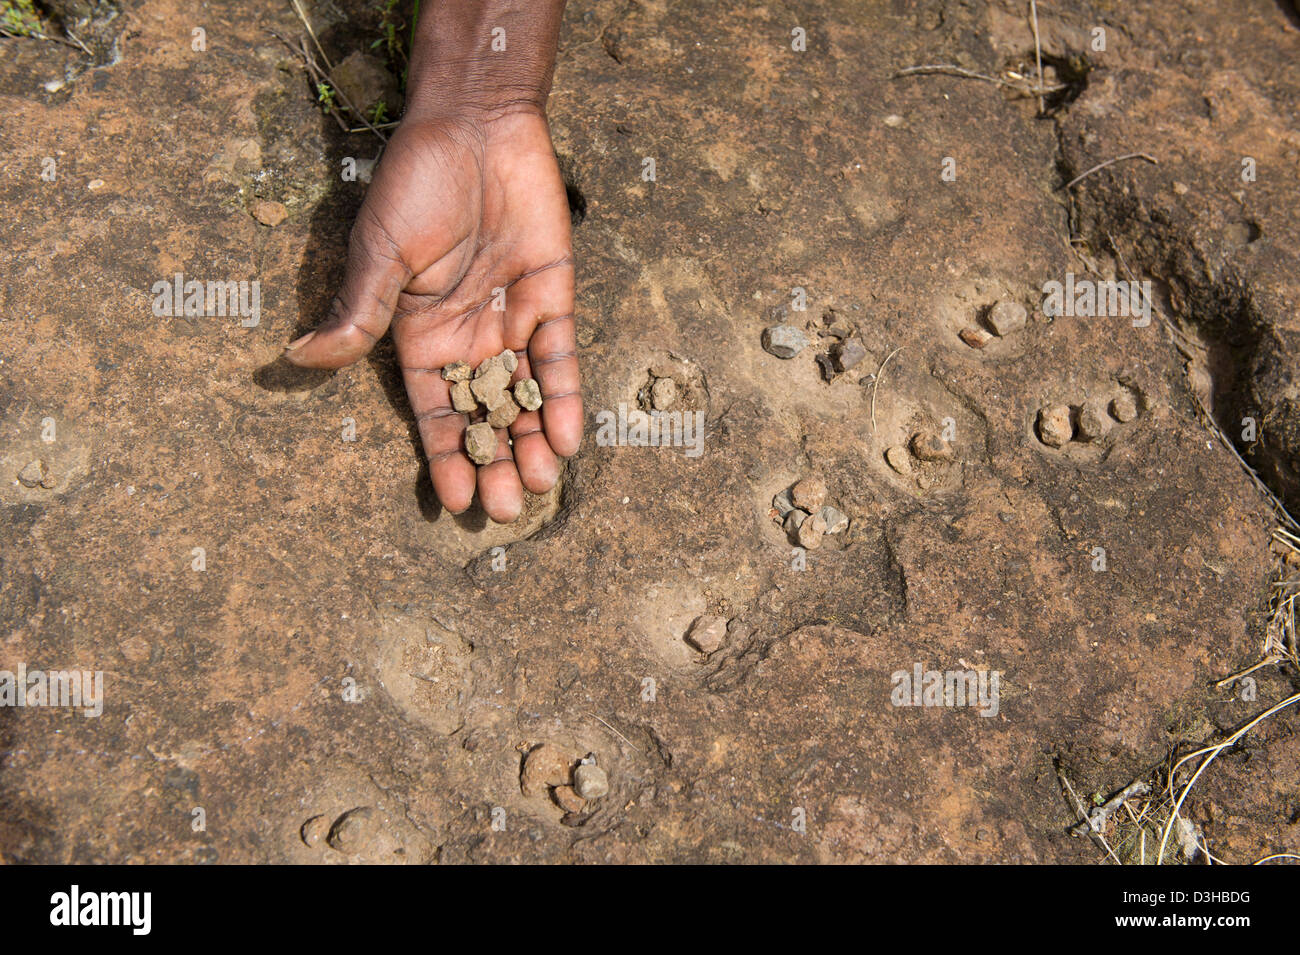 Stone slab with Bao game, neolithic excavation site from 1500 BC, Hyrax Hill prehistoric site, Nakuru, Kenya Stock Photo